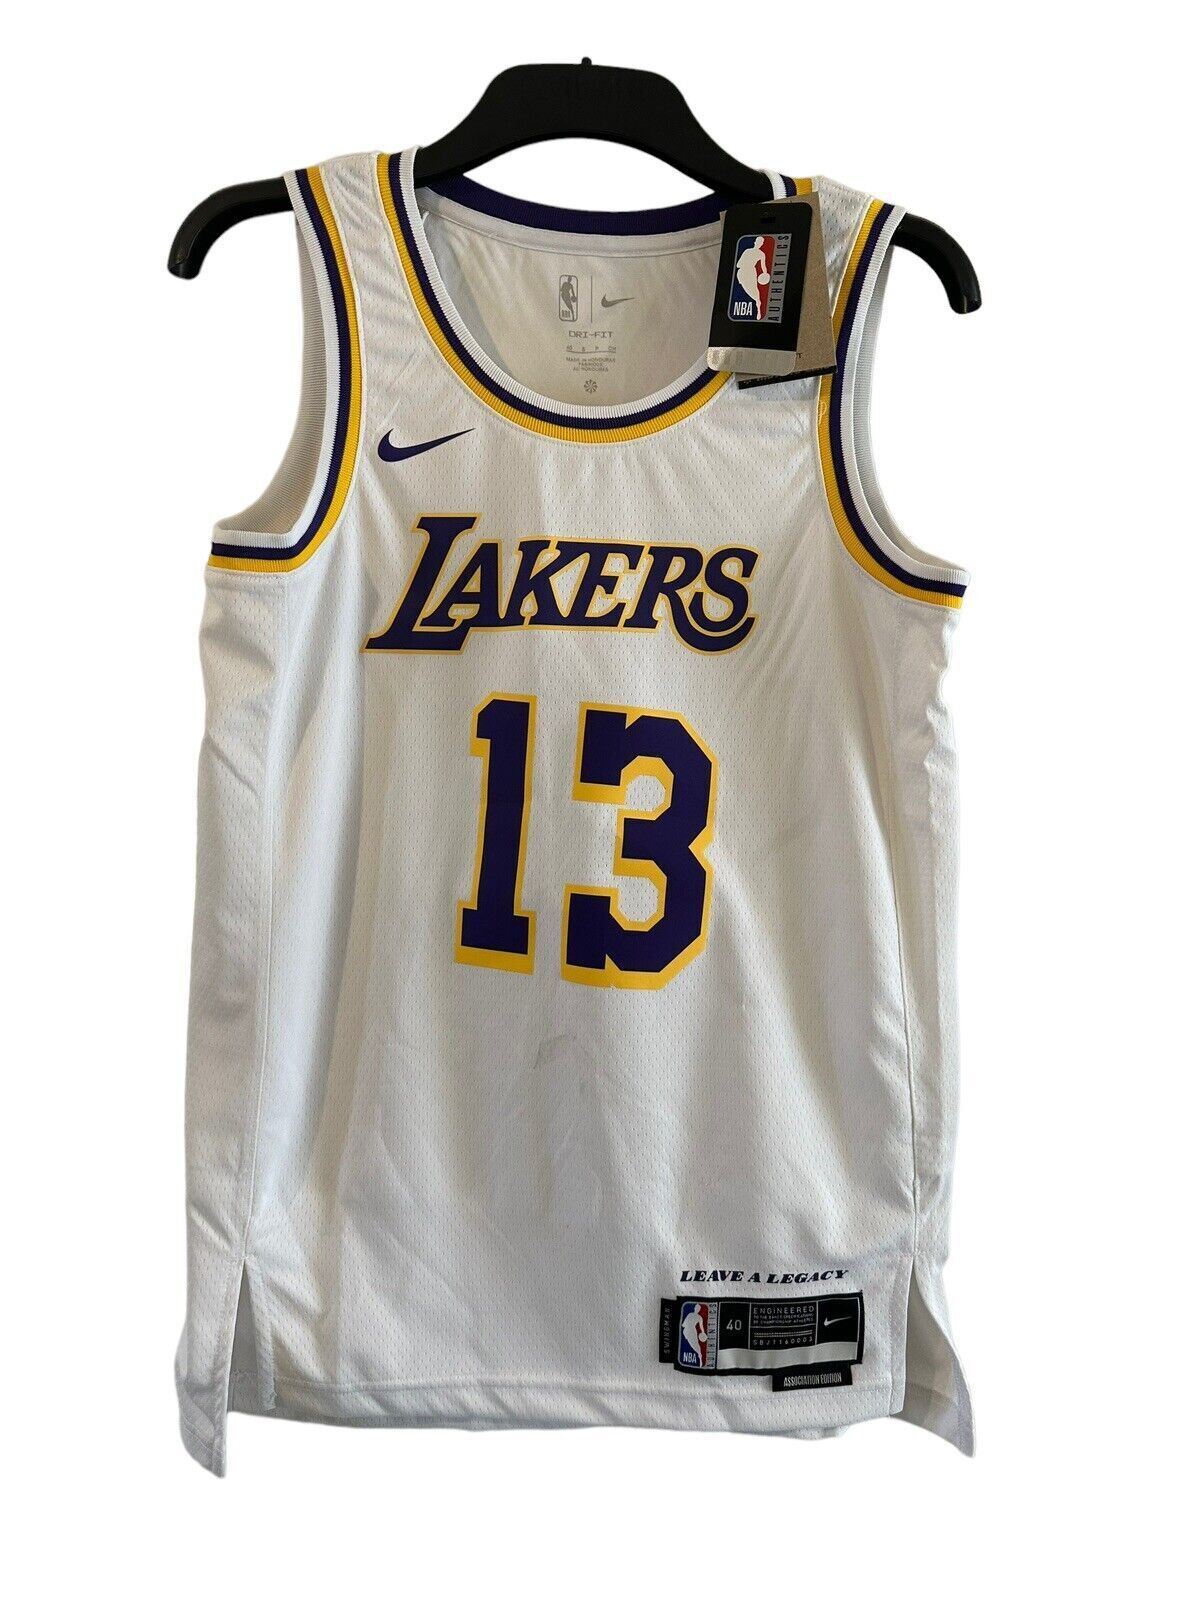 Nike NBA LA Lakers Association Edition Jersey GAT 13 Men’s Small *DF*